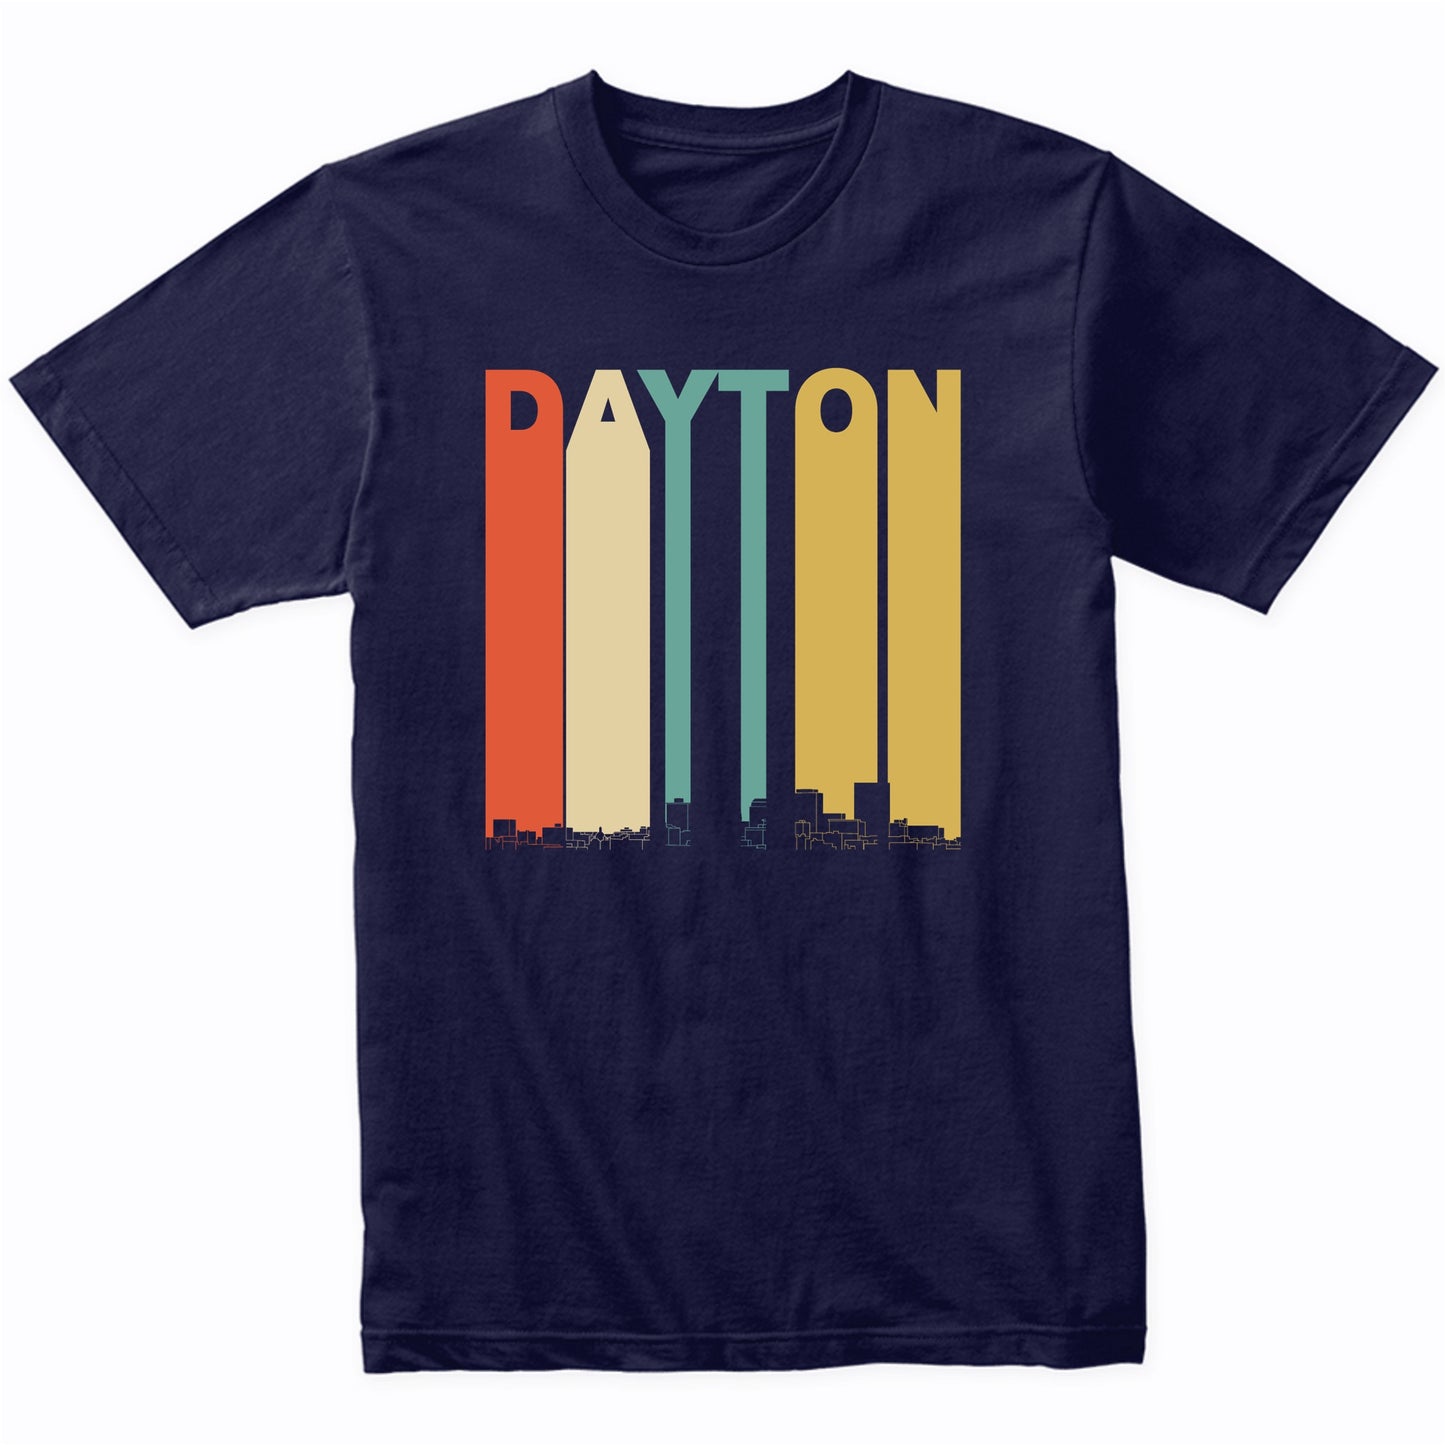 Vintage 1970's Style Dayton Ohio Skyline T-Shirt